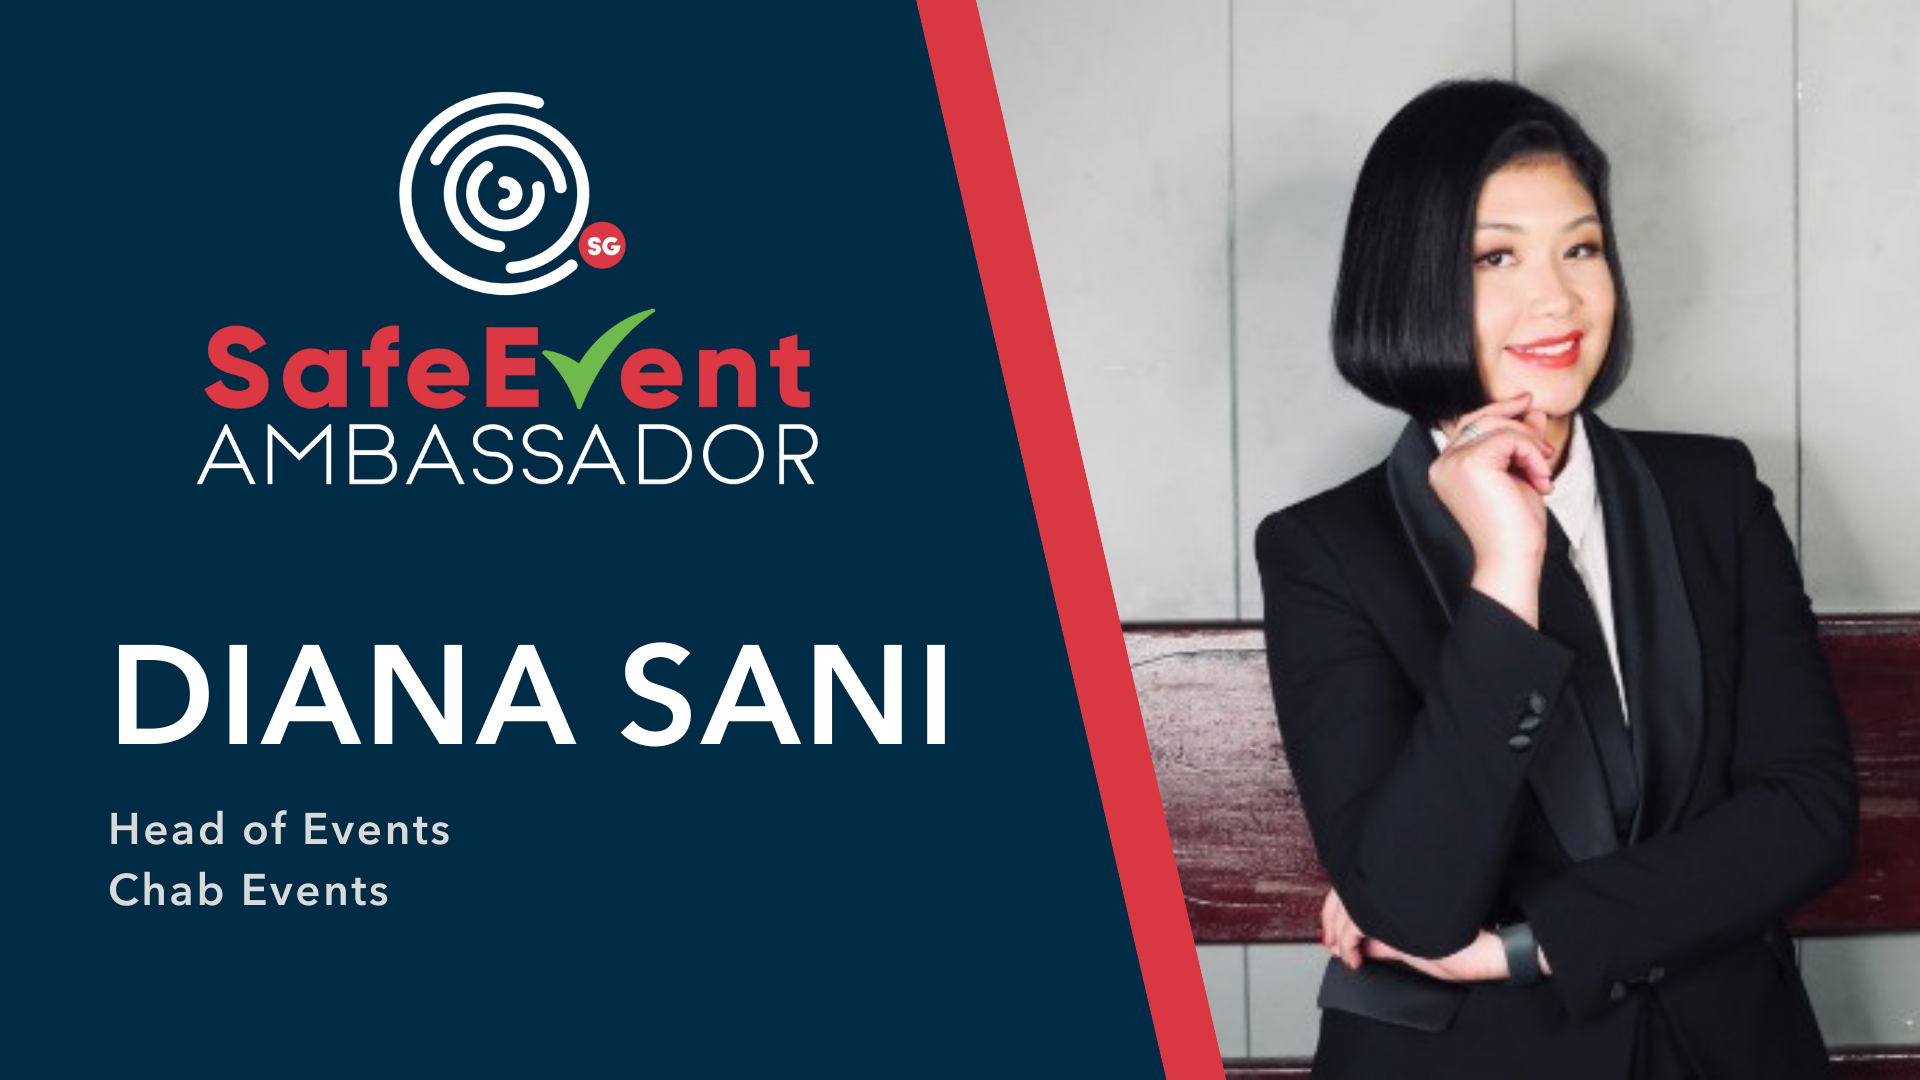 SG SafeEvent Ambassador Spotlight: Diana Sani, Head of Events of Chab Events